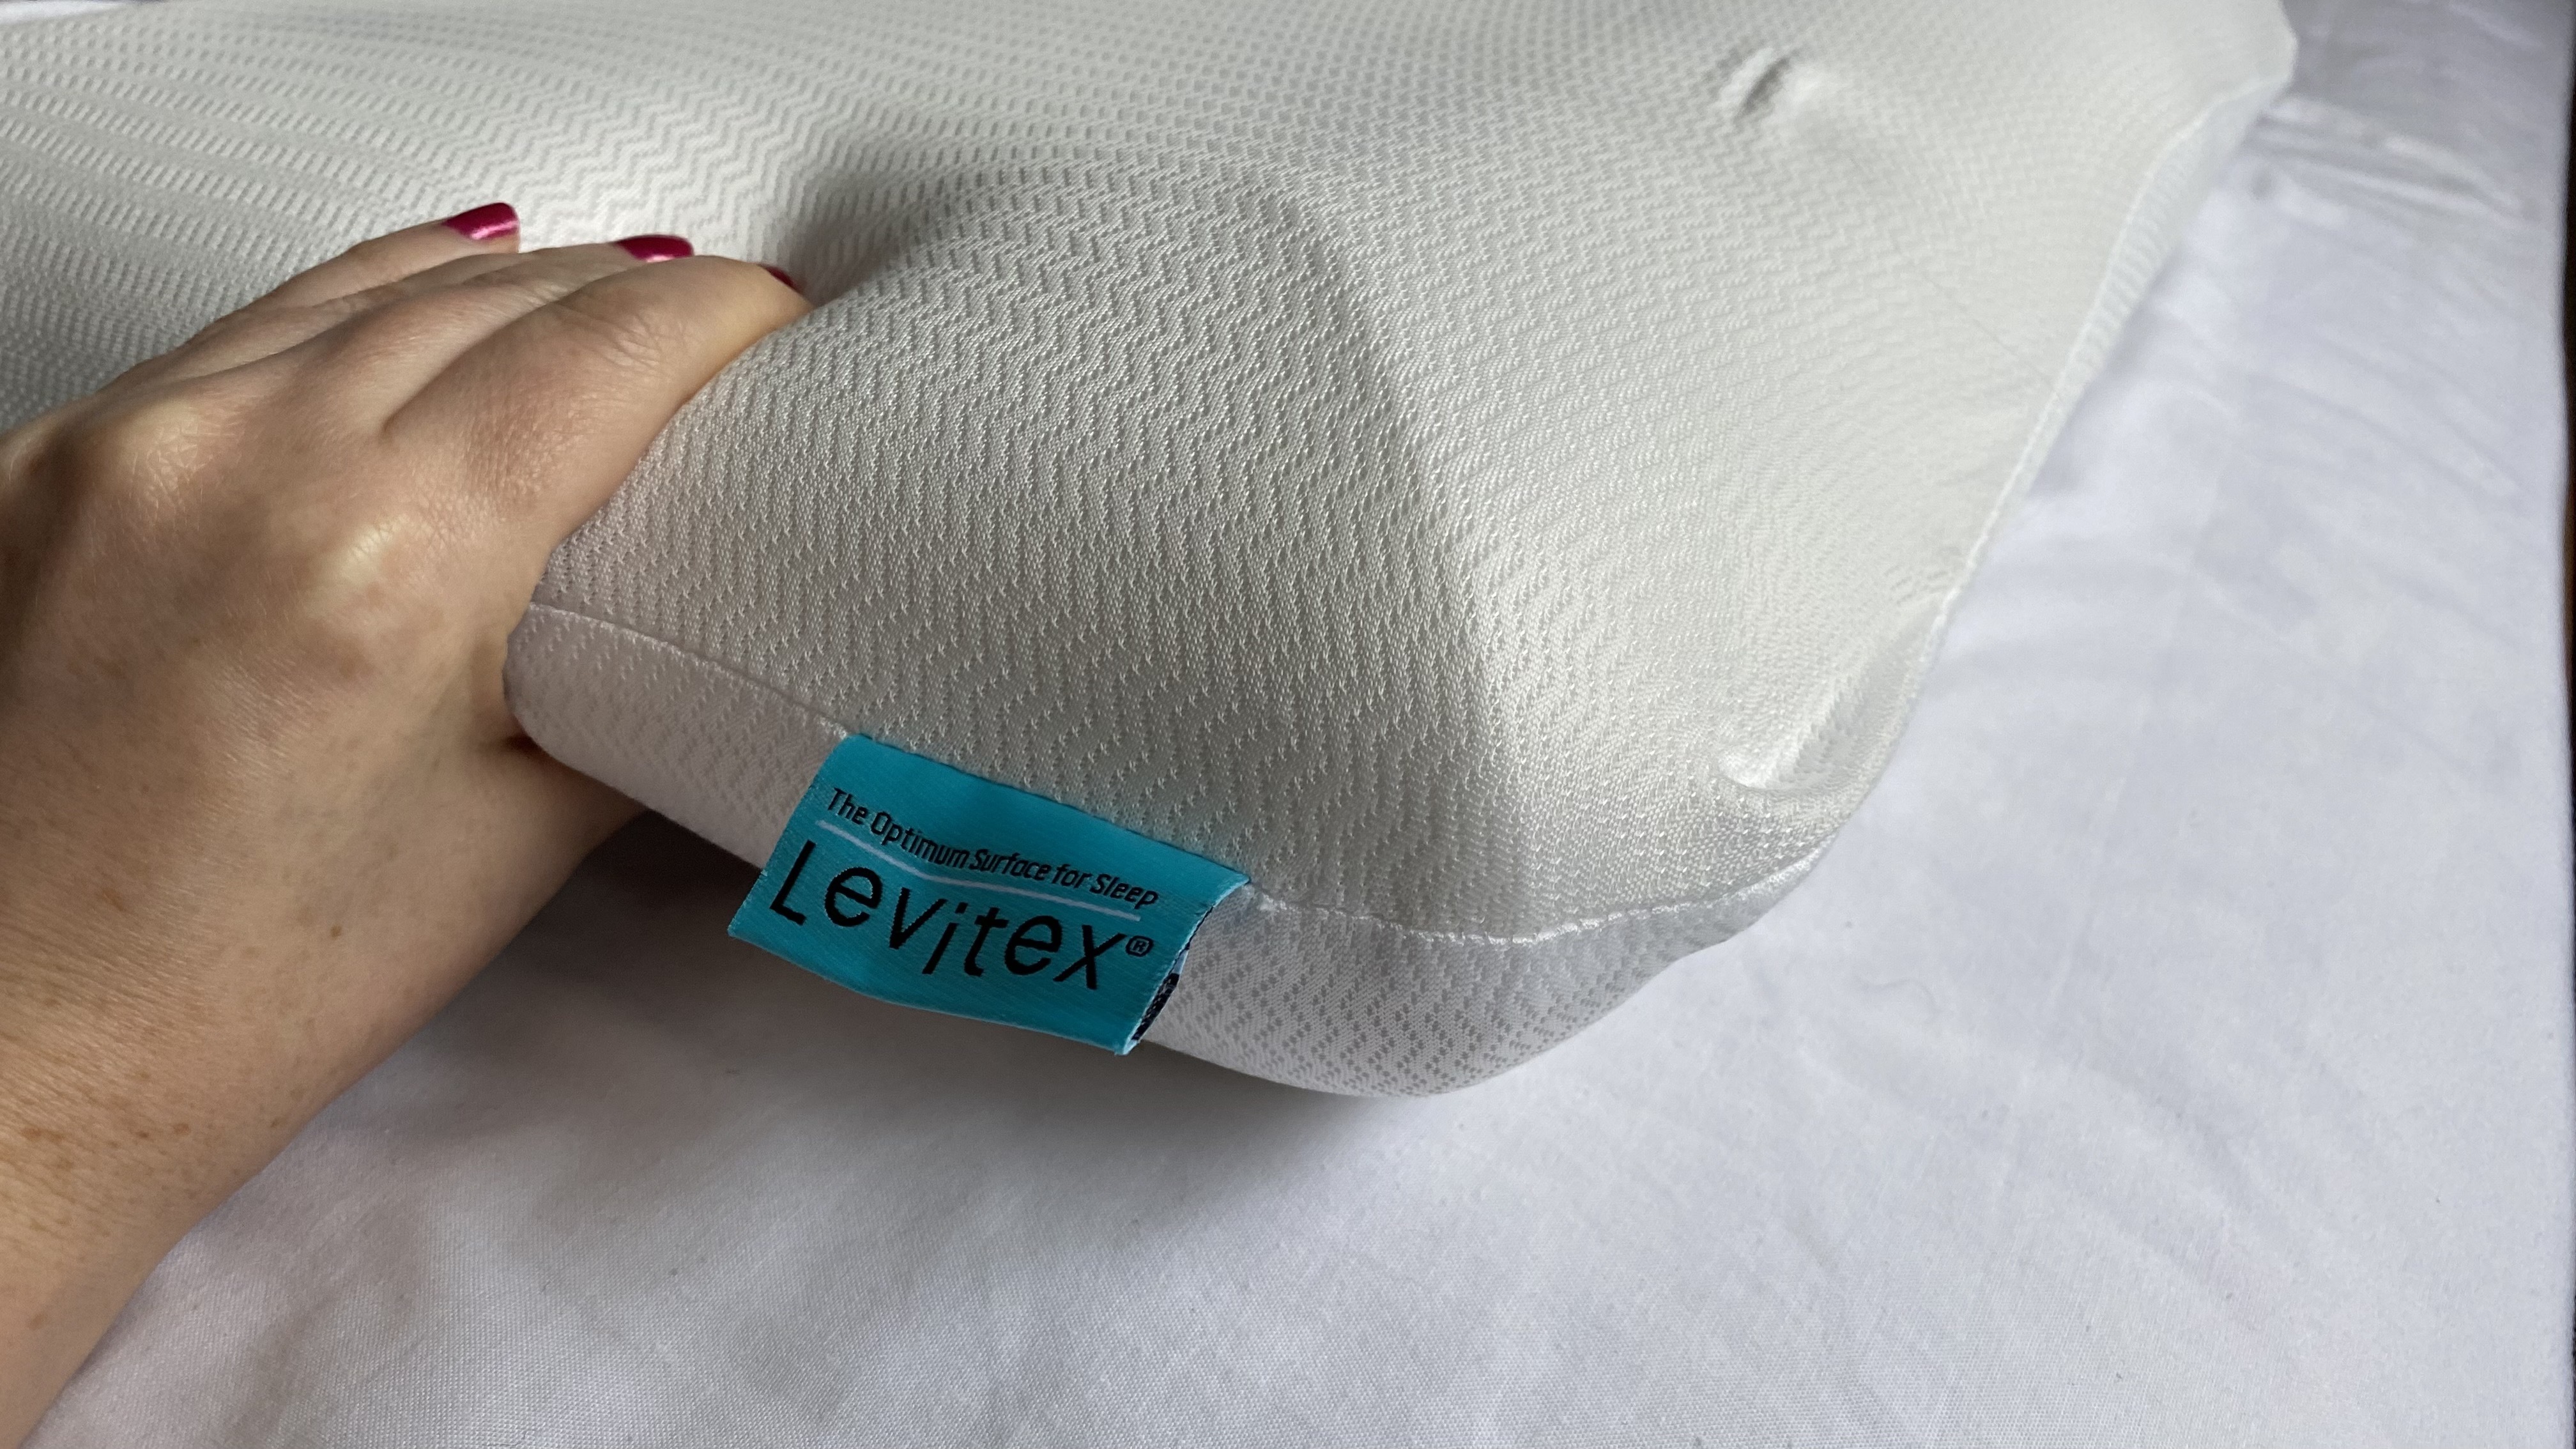 Levitex Sleep Posture Pillow review | TechRadar